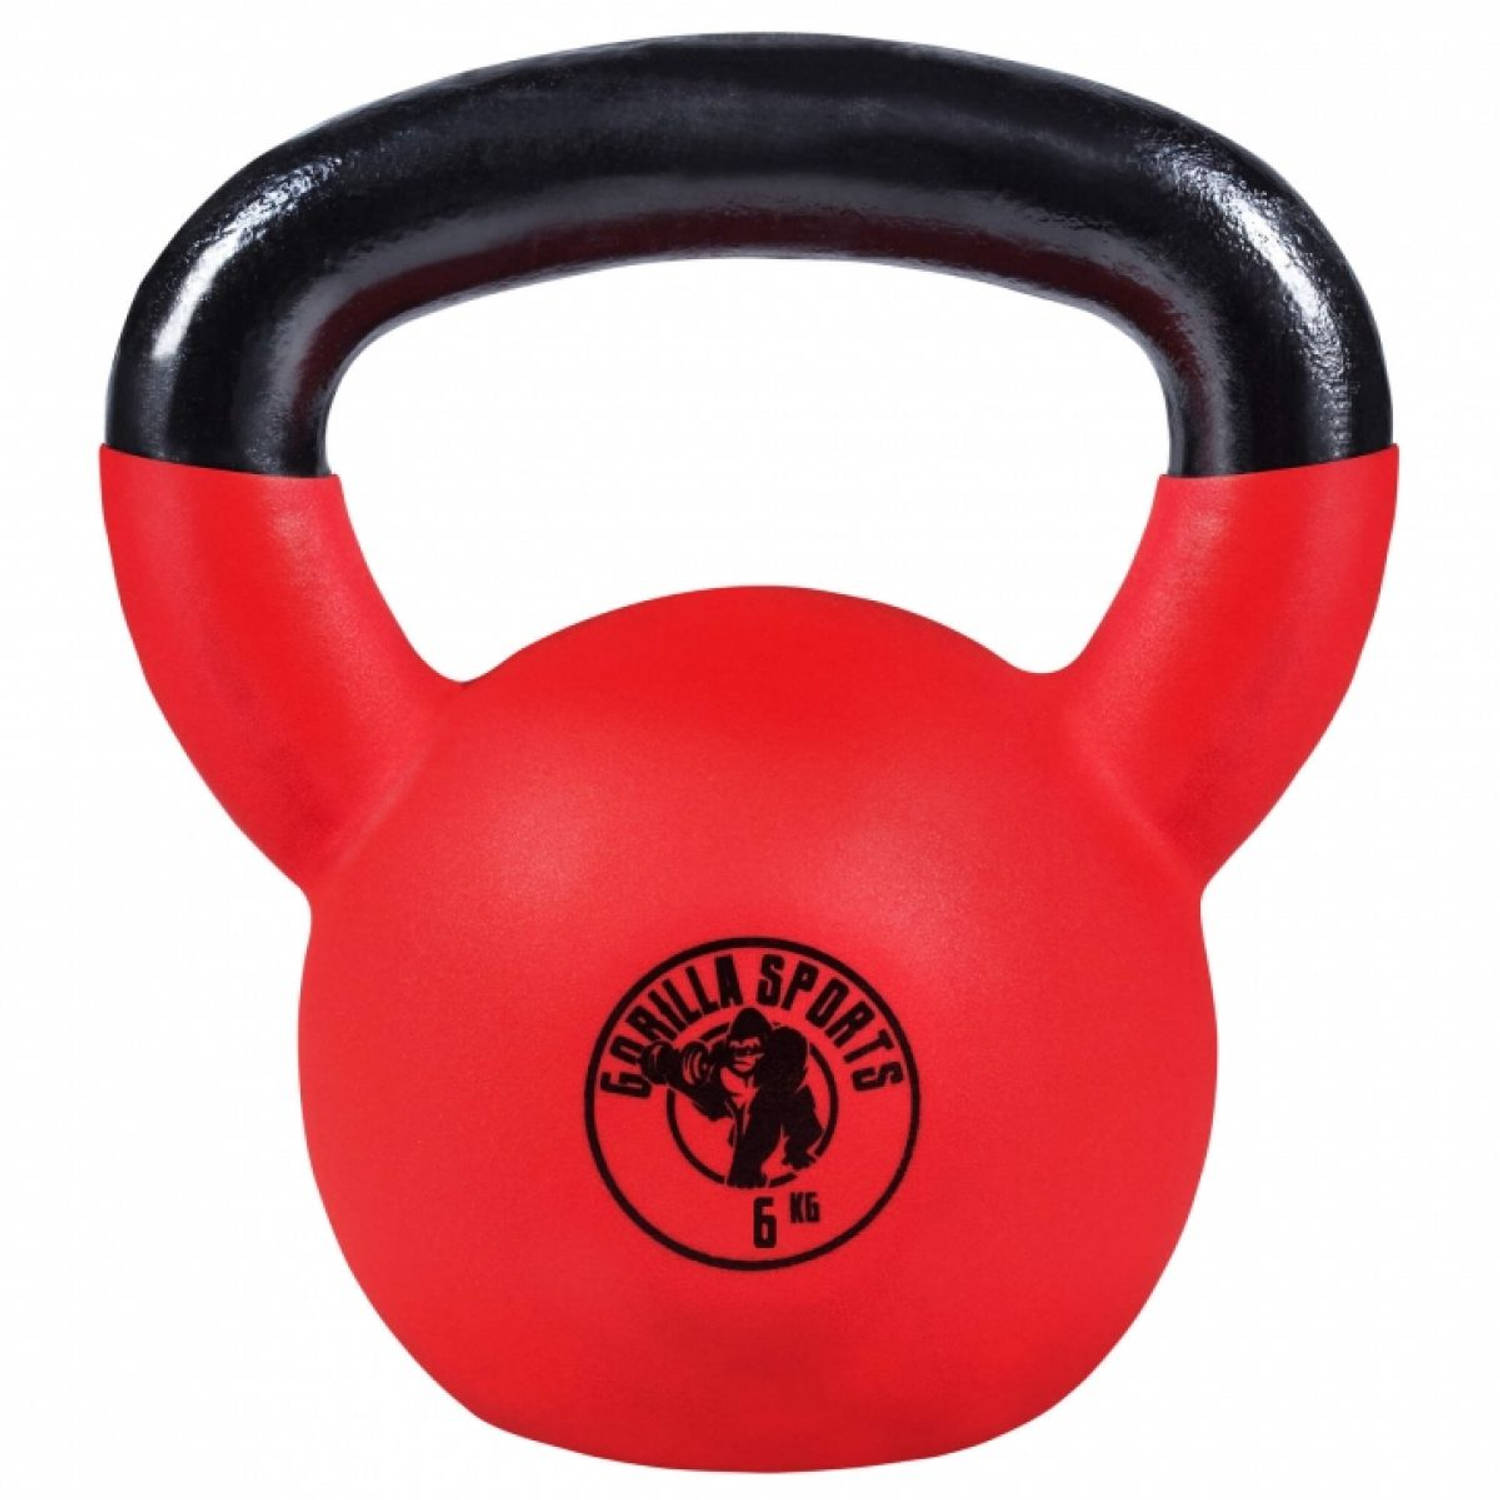 Gorilla Sports Kettlebell Gietijzer (rubber coating) 6 kg